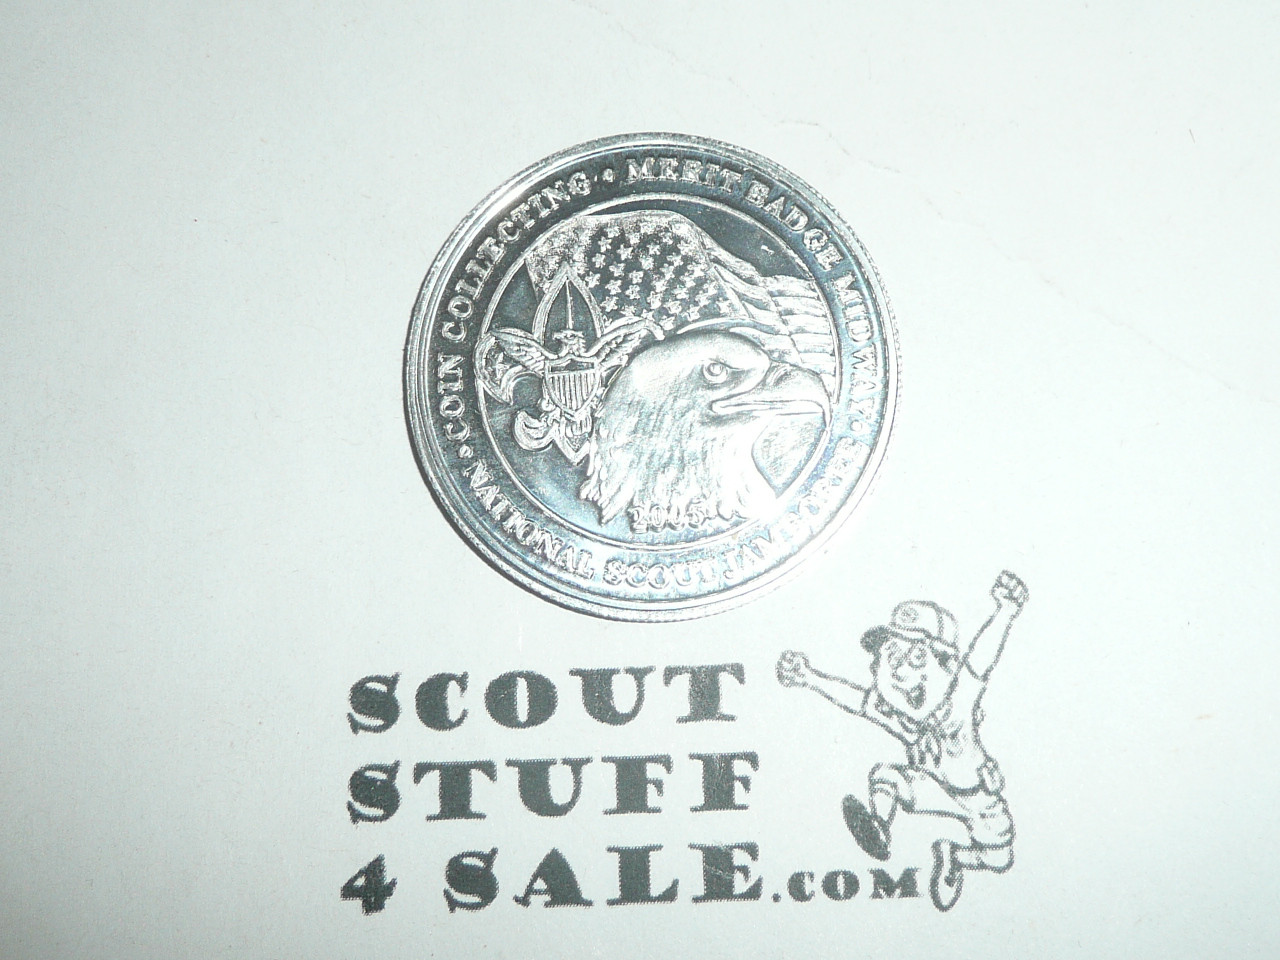 2005 National Jamboree Coin / Token, Rudy Dioszegi